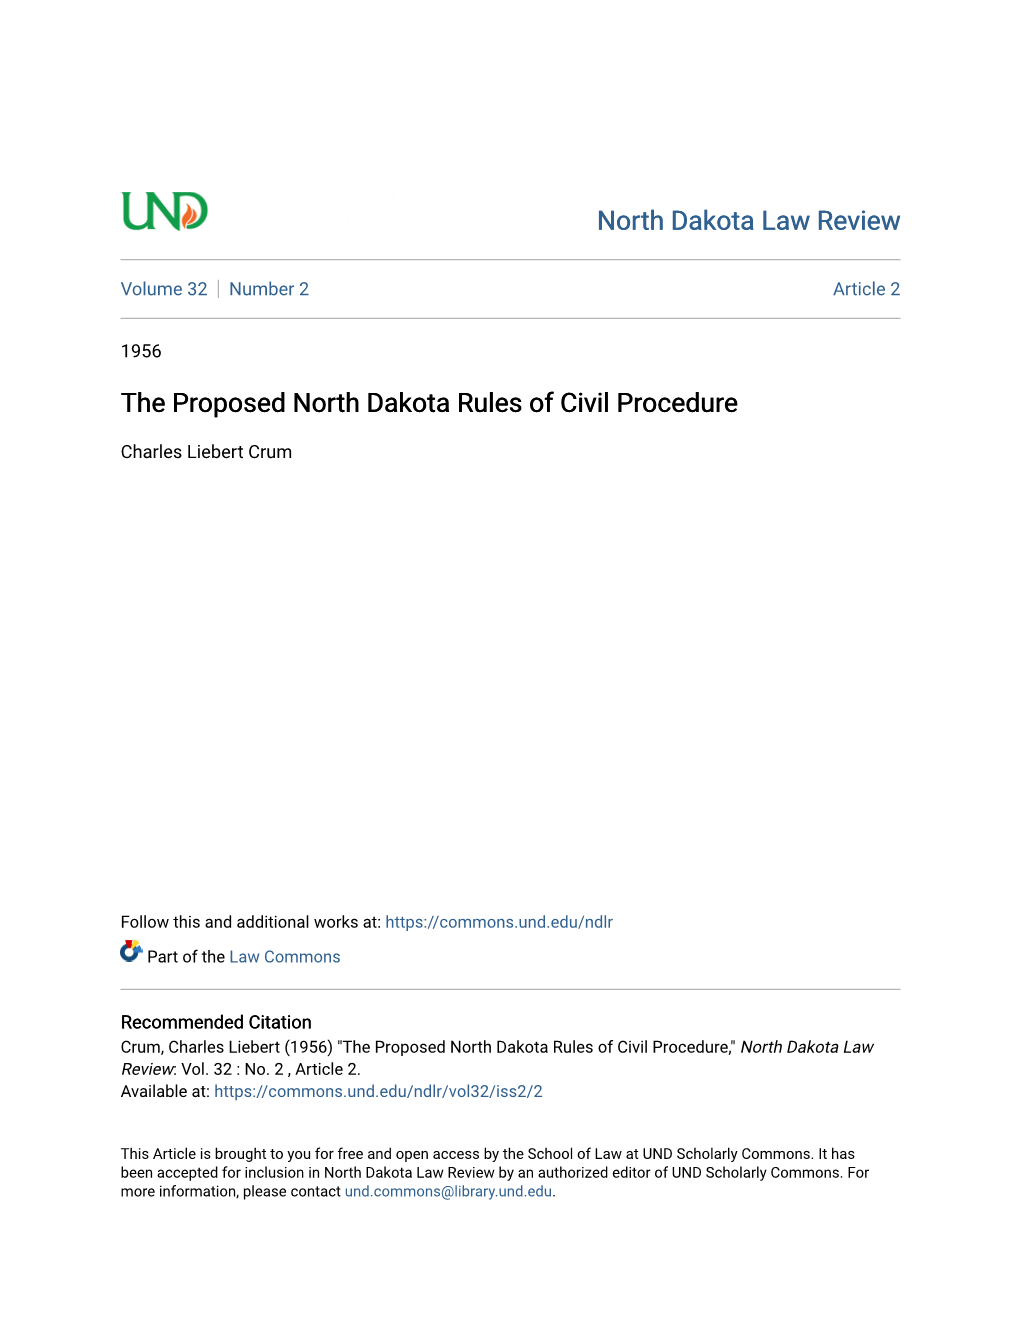 The Proposed North Dakota Rules of Civil Procedure